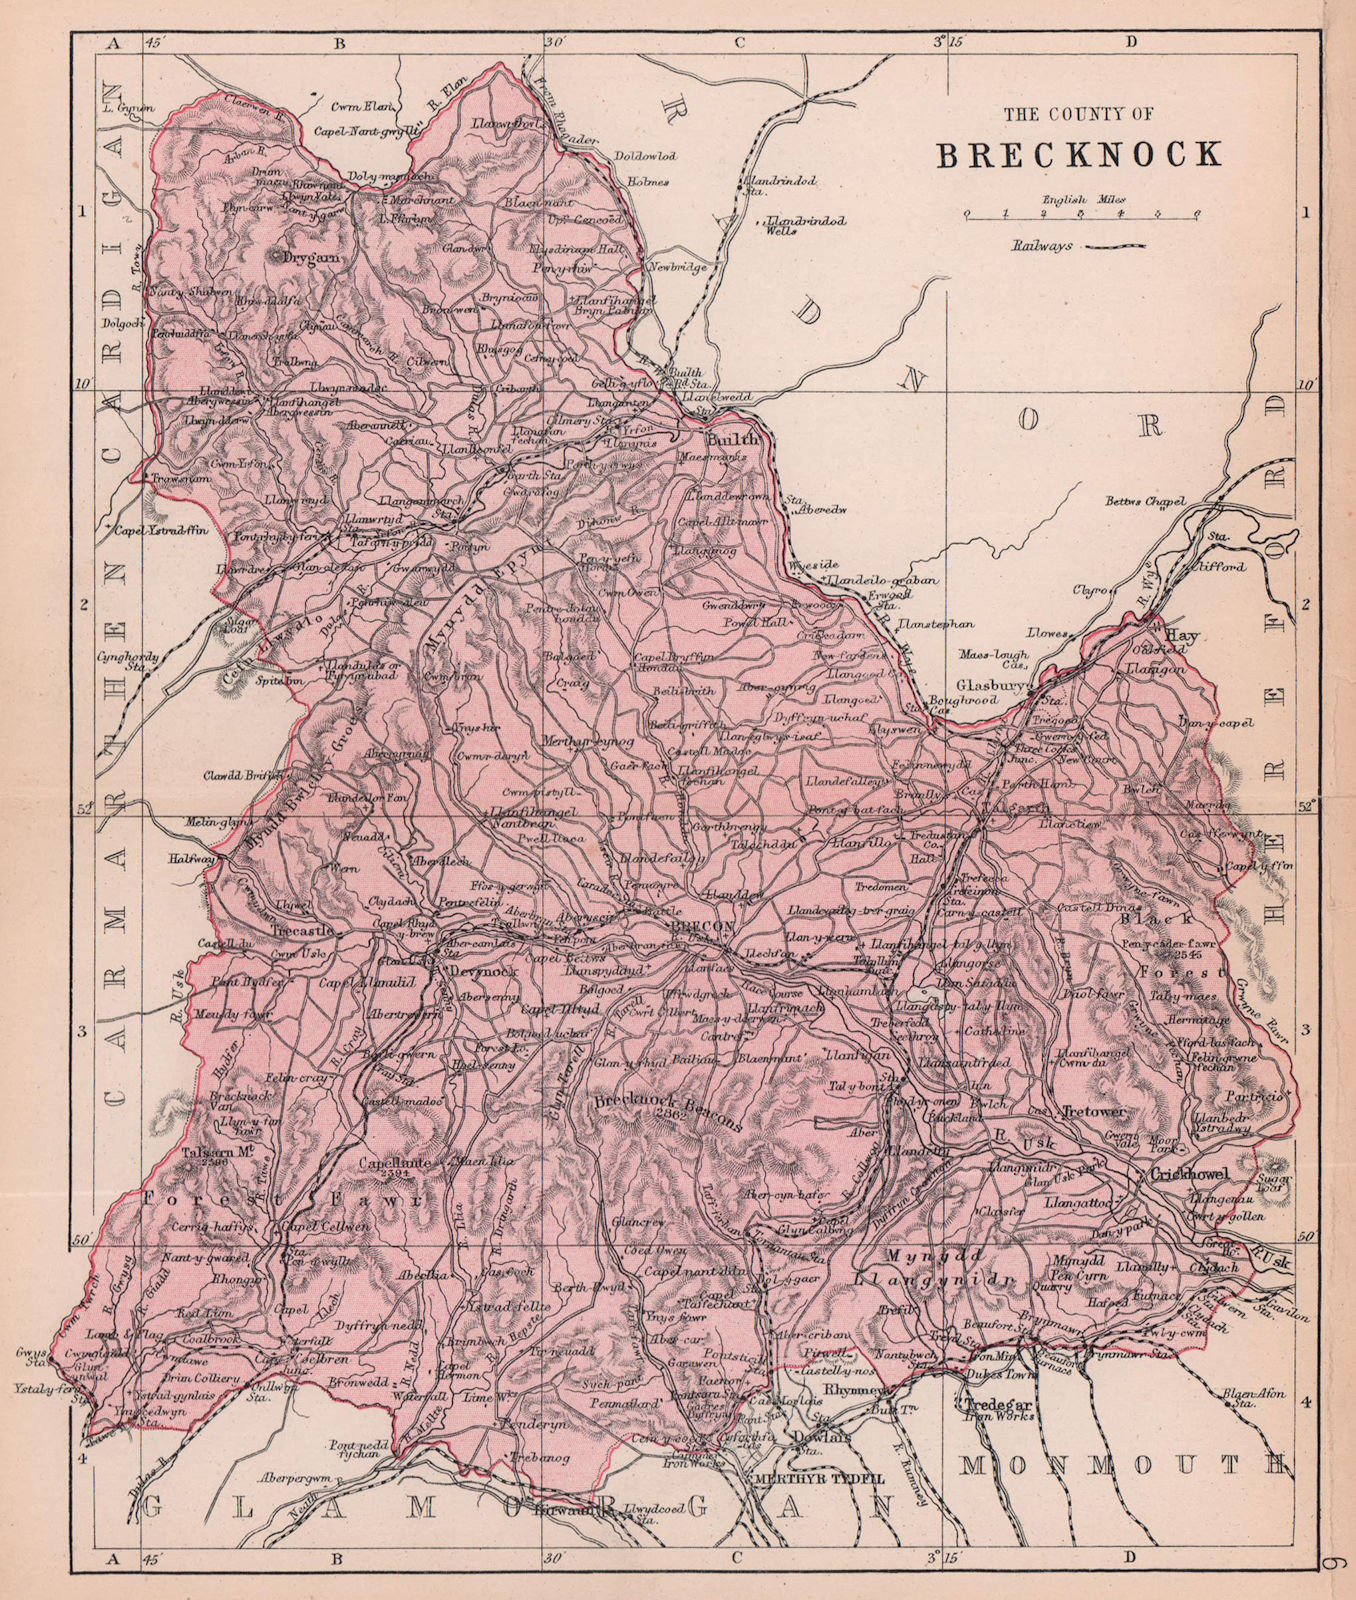 BRECKNOCKSHIRE "County of Brecknock" Brecon Beacons Wales BARTHOLOMEW 1882 map